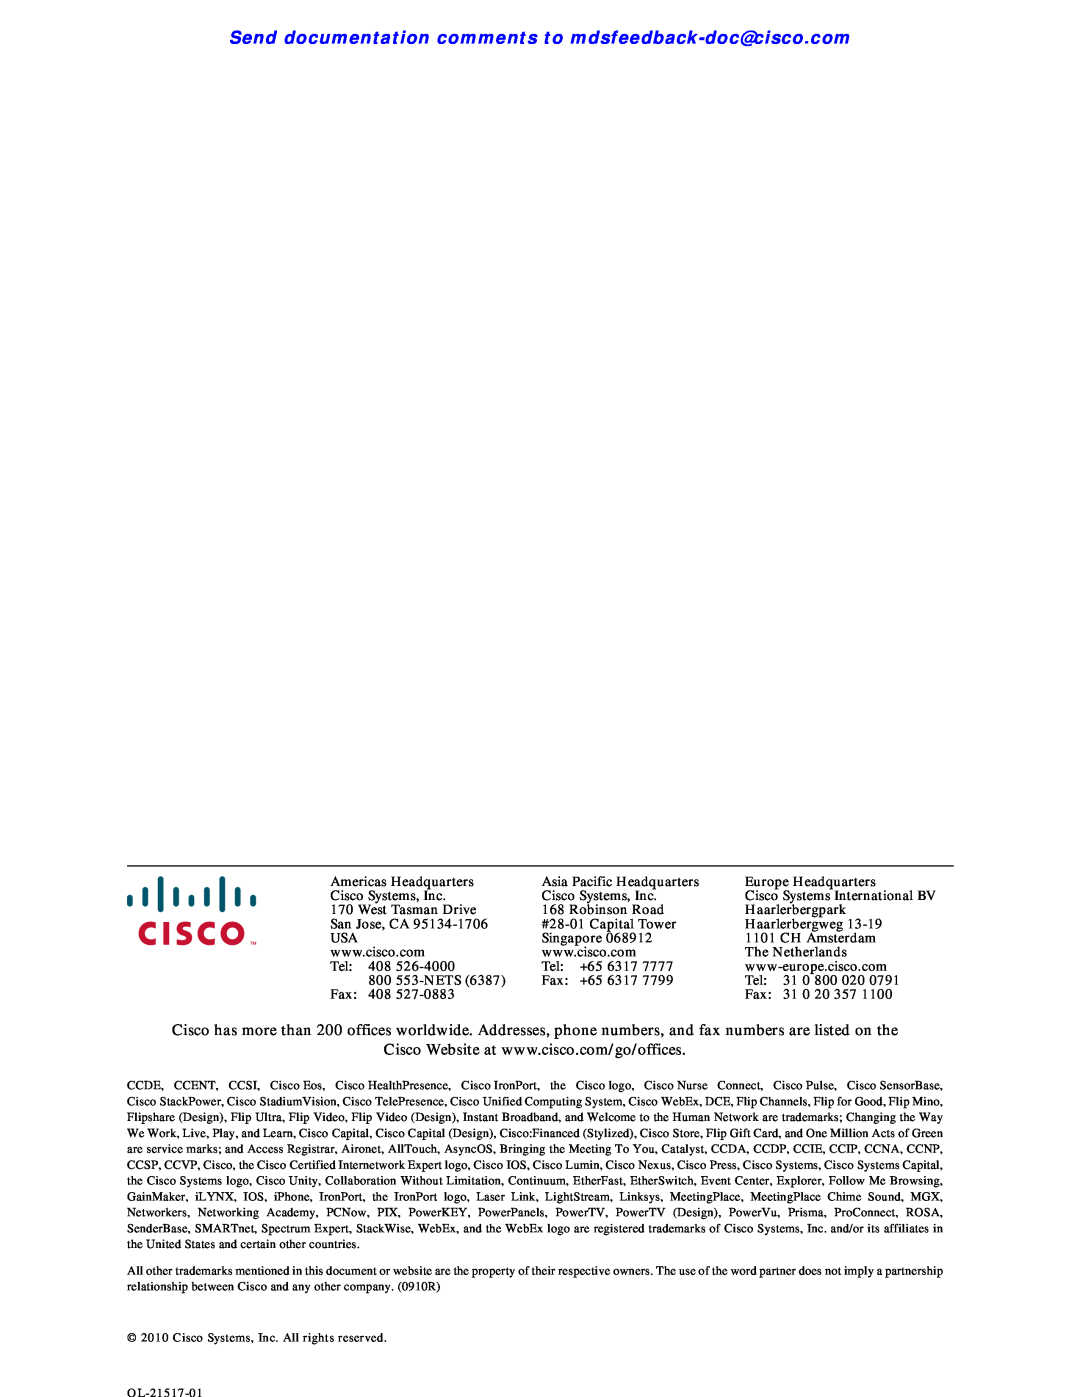 Casio DSC9148D8G48PK9 Send documentation comments to mdsfeedback-doc@cisco.com, Americas Headquarters, Europe Headquarters 